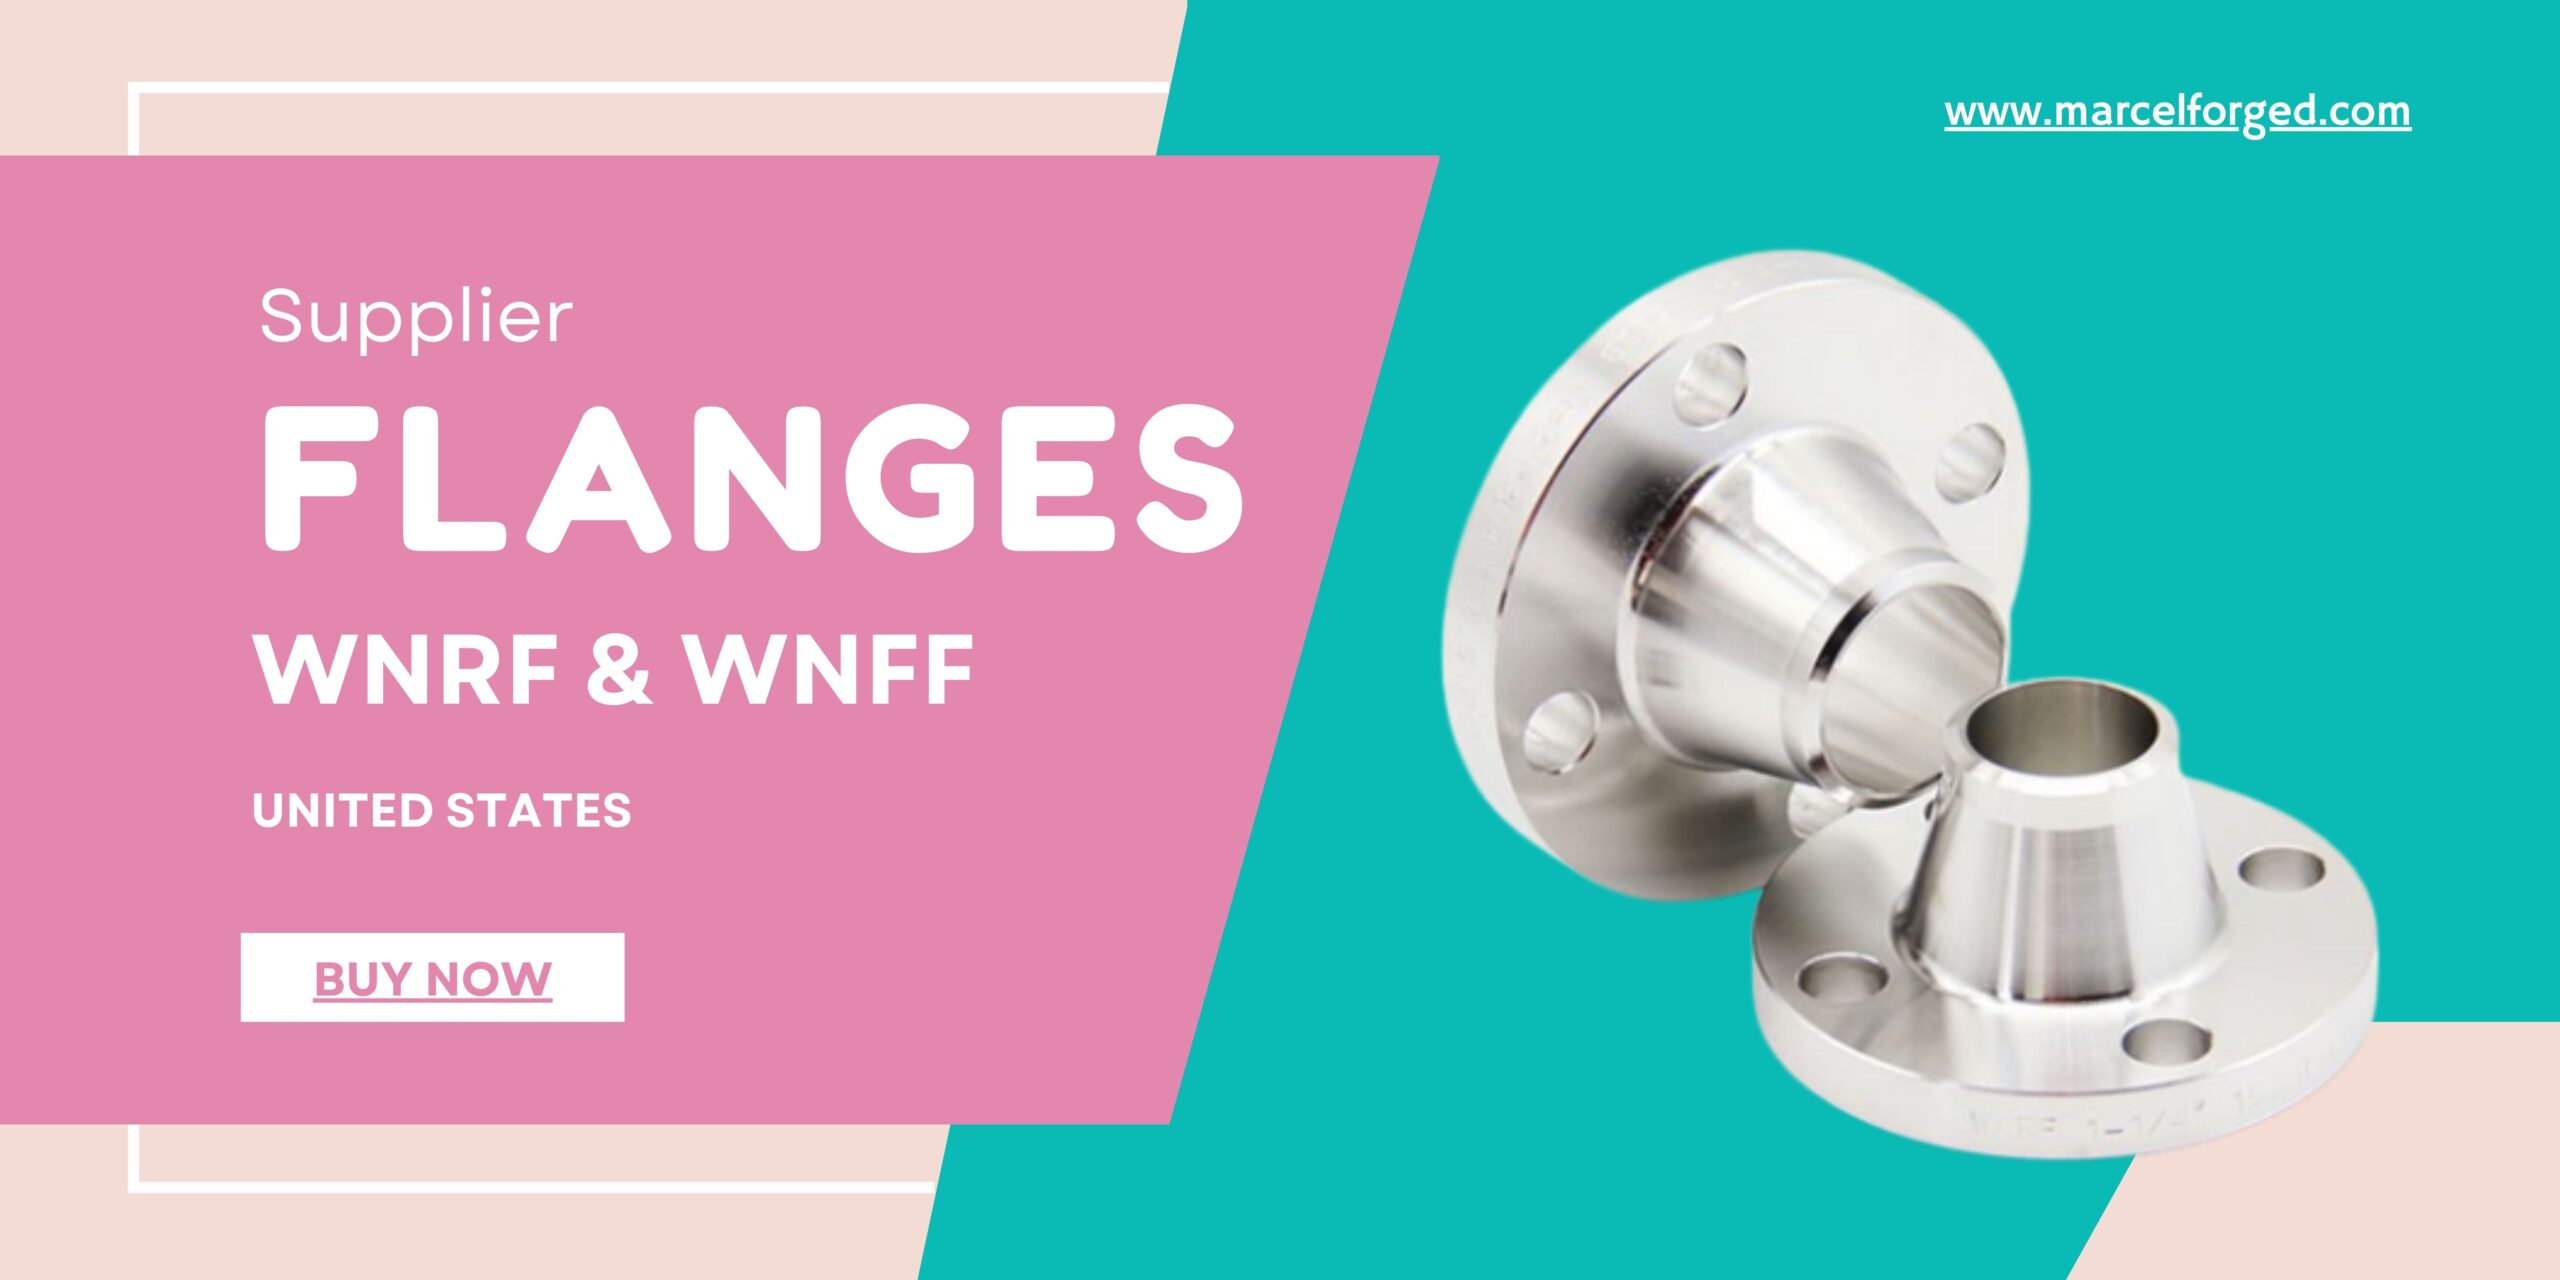 WNRF & WNFF Flange Suppliers USA - MarcelForged